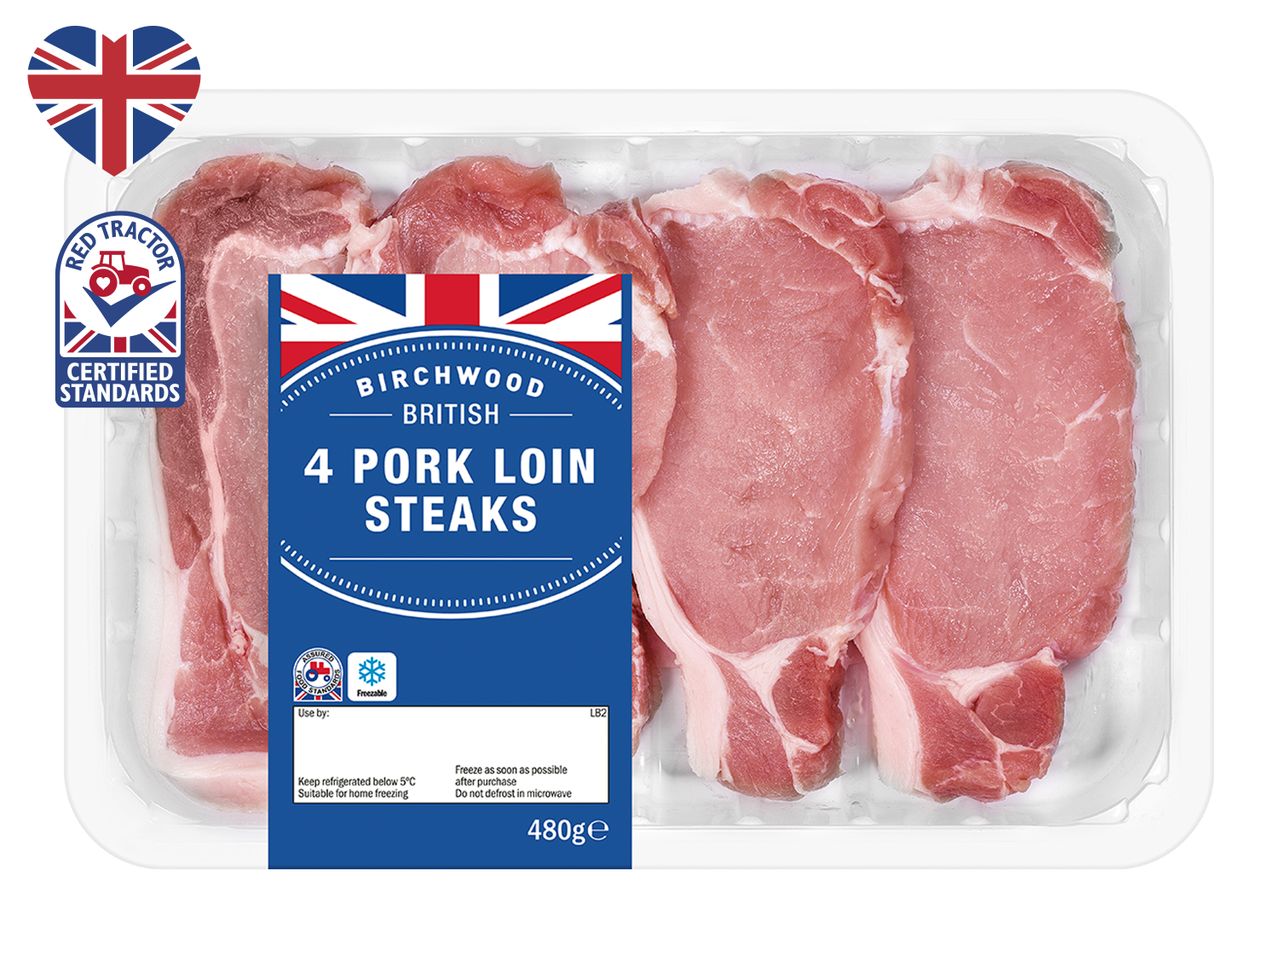 Go to full screen view: Birchwood British 4 Pork Loin Steaks - Image 1